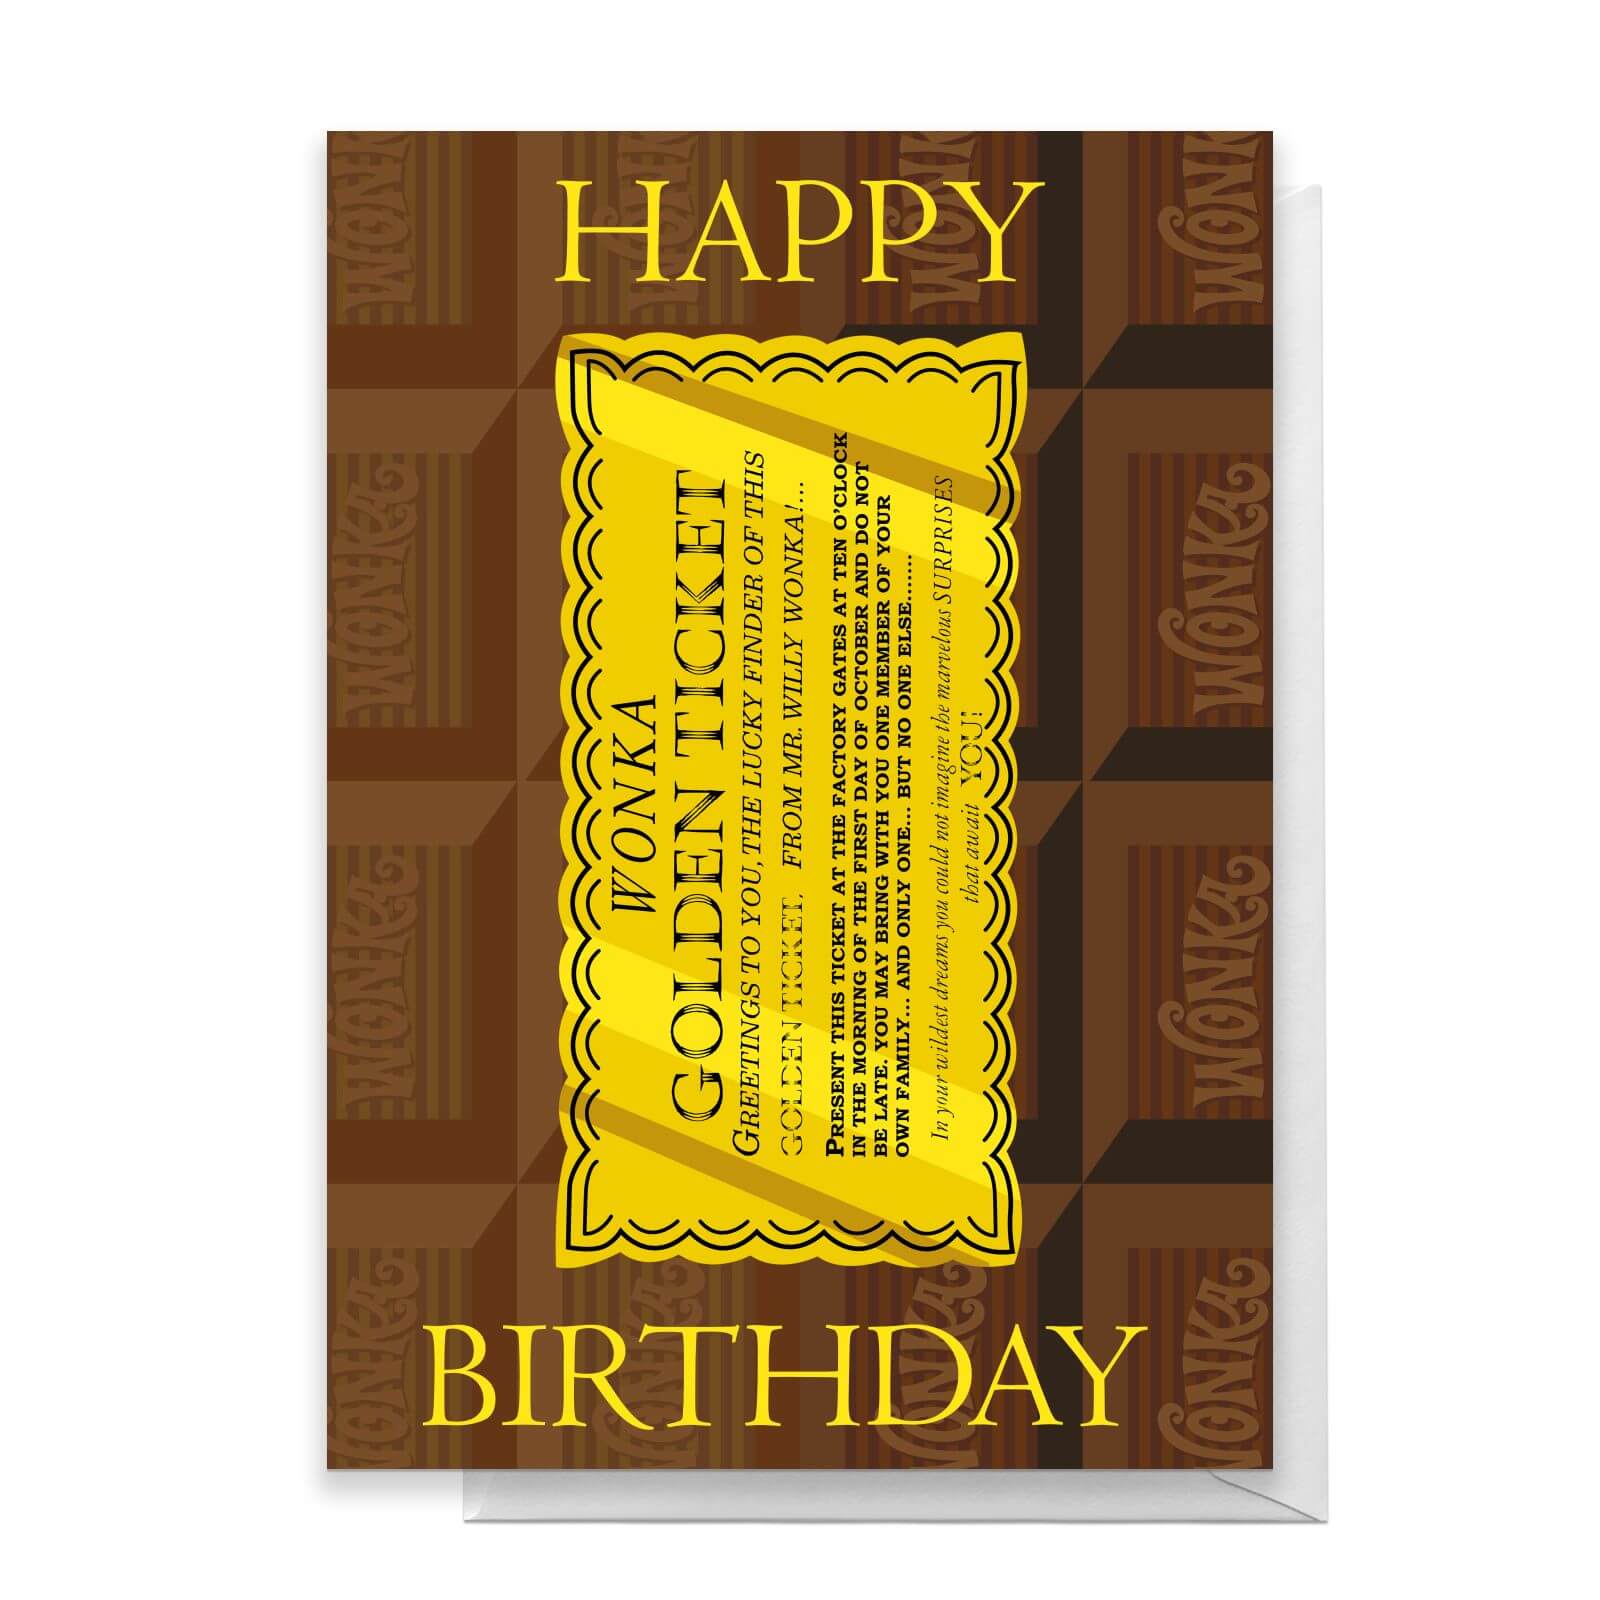 Willy Wonka Golden Ticket Birthday Greetings Card - Standard Card